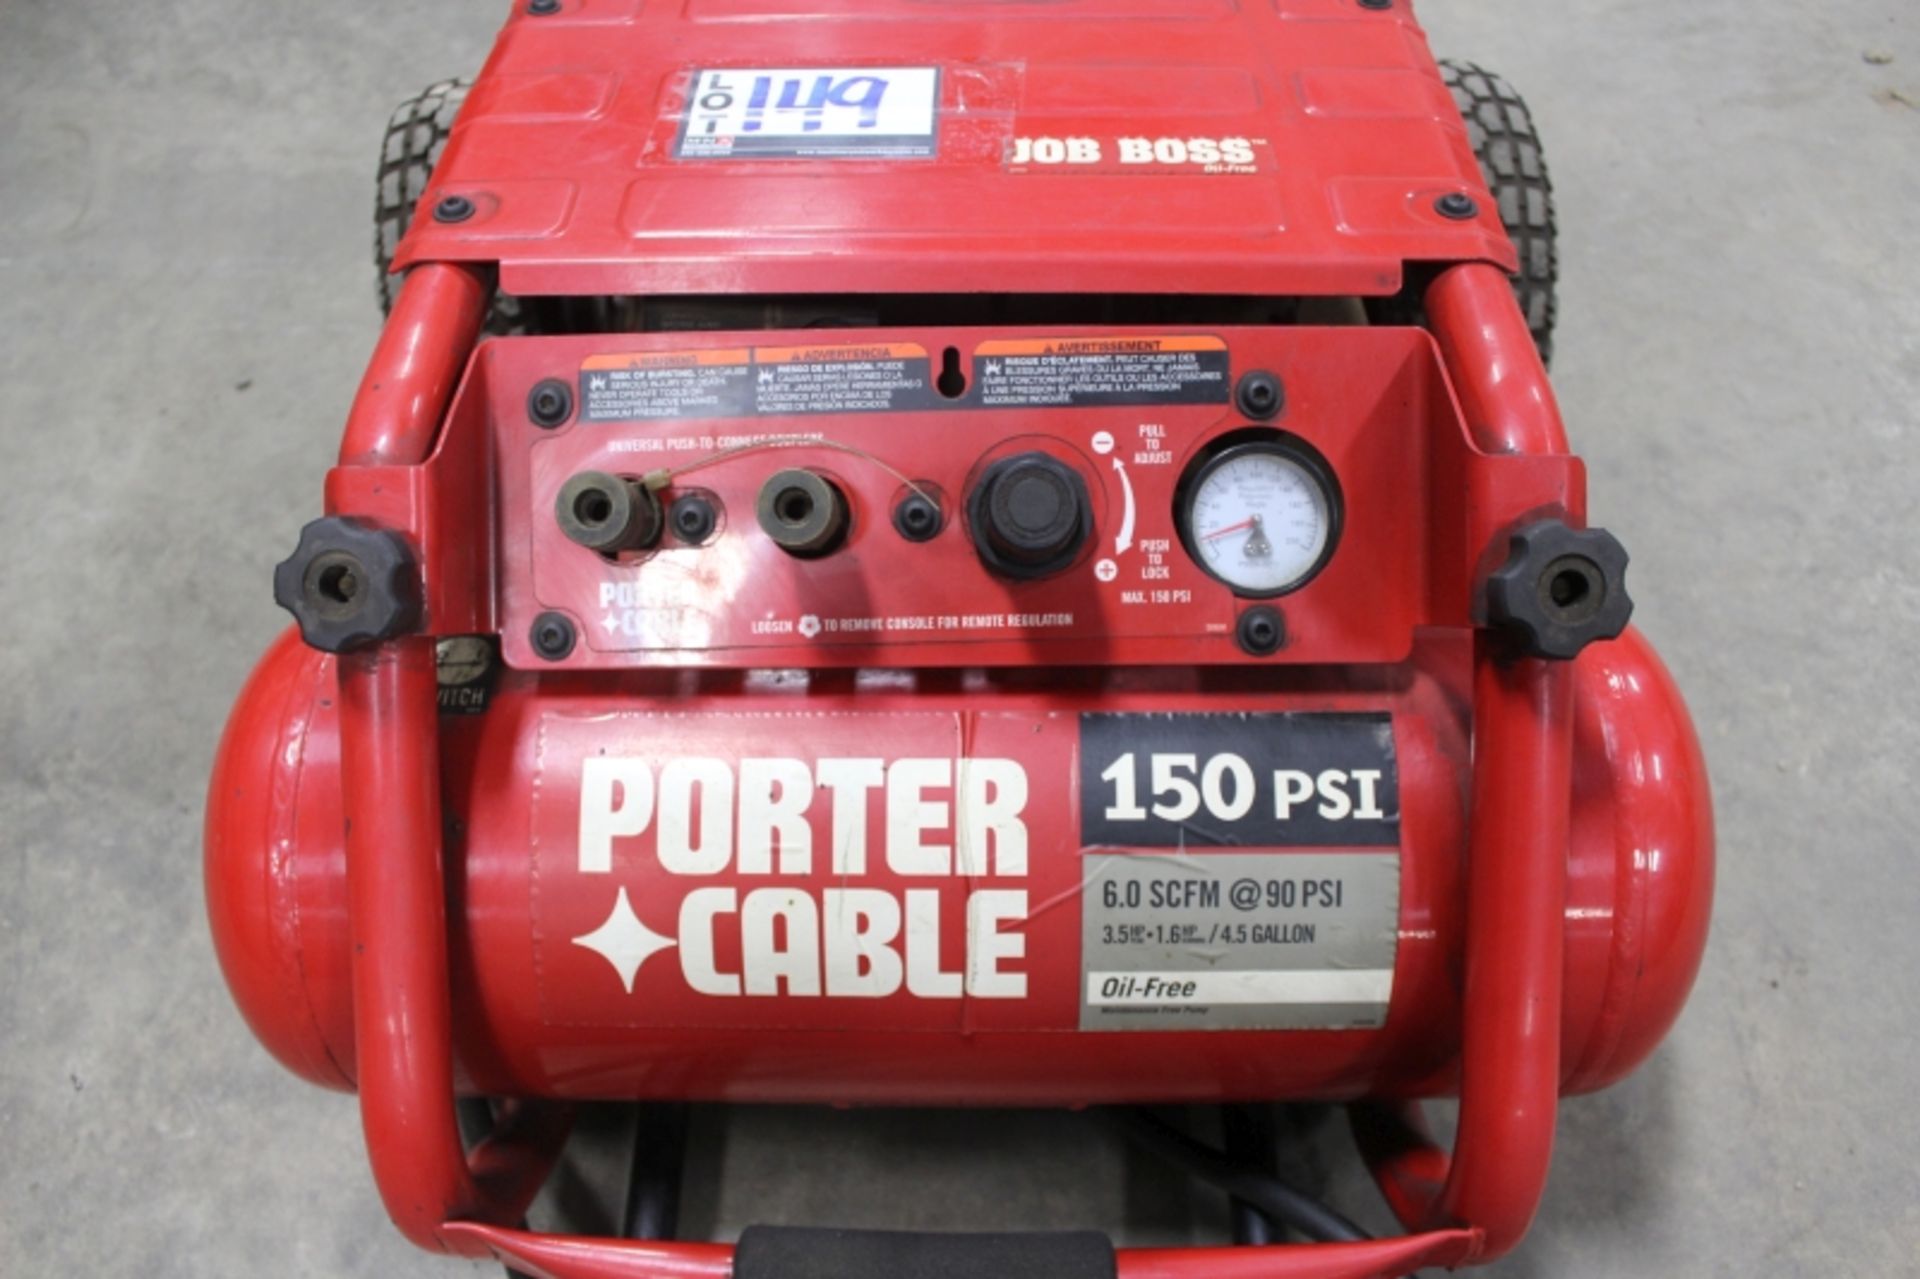 Porter Cable Job Boss 4.5 Gal 150 PSI, Air Compressor - Image 3 of 3